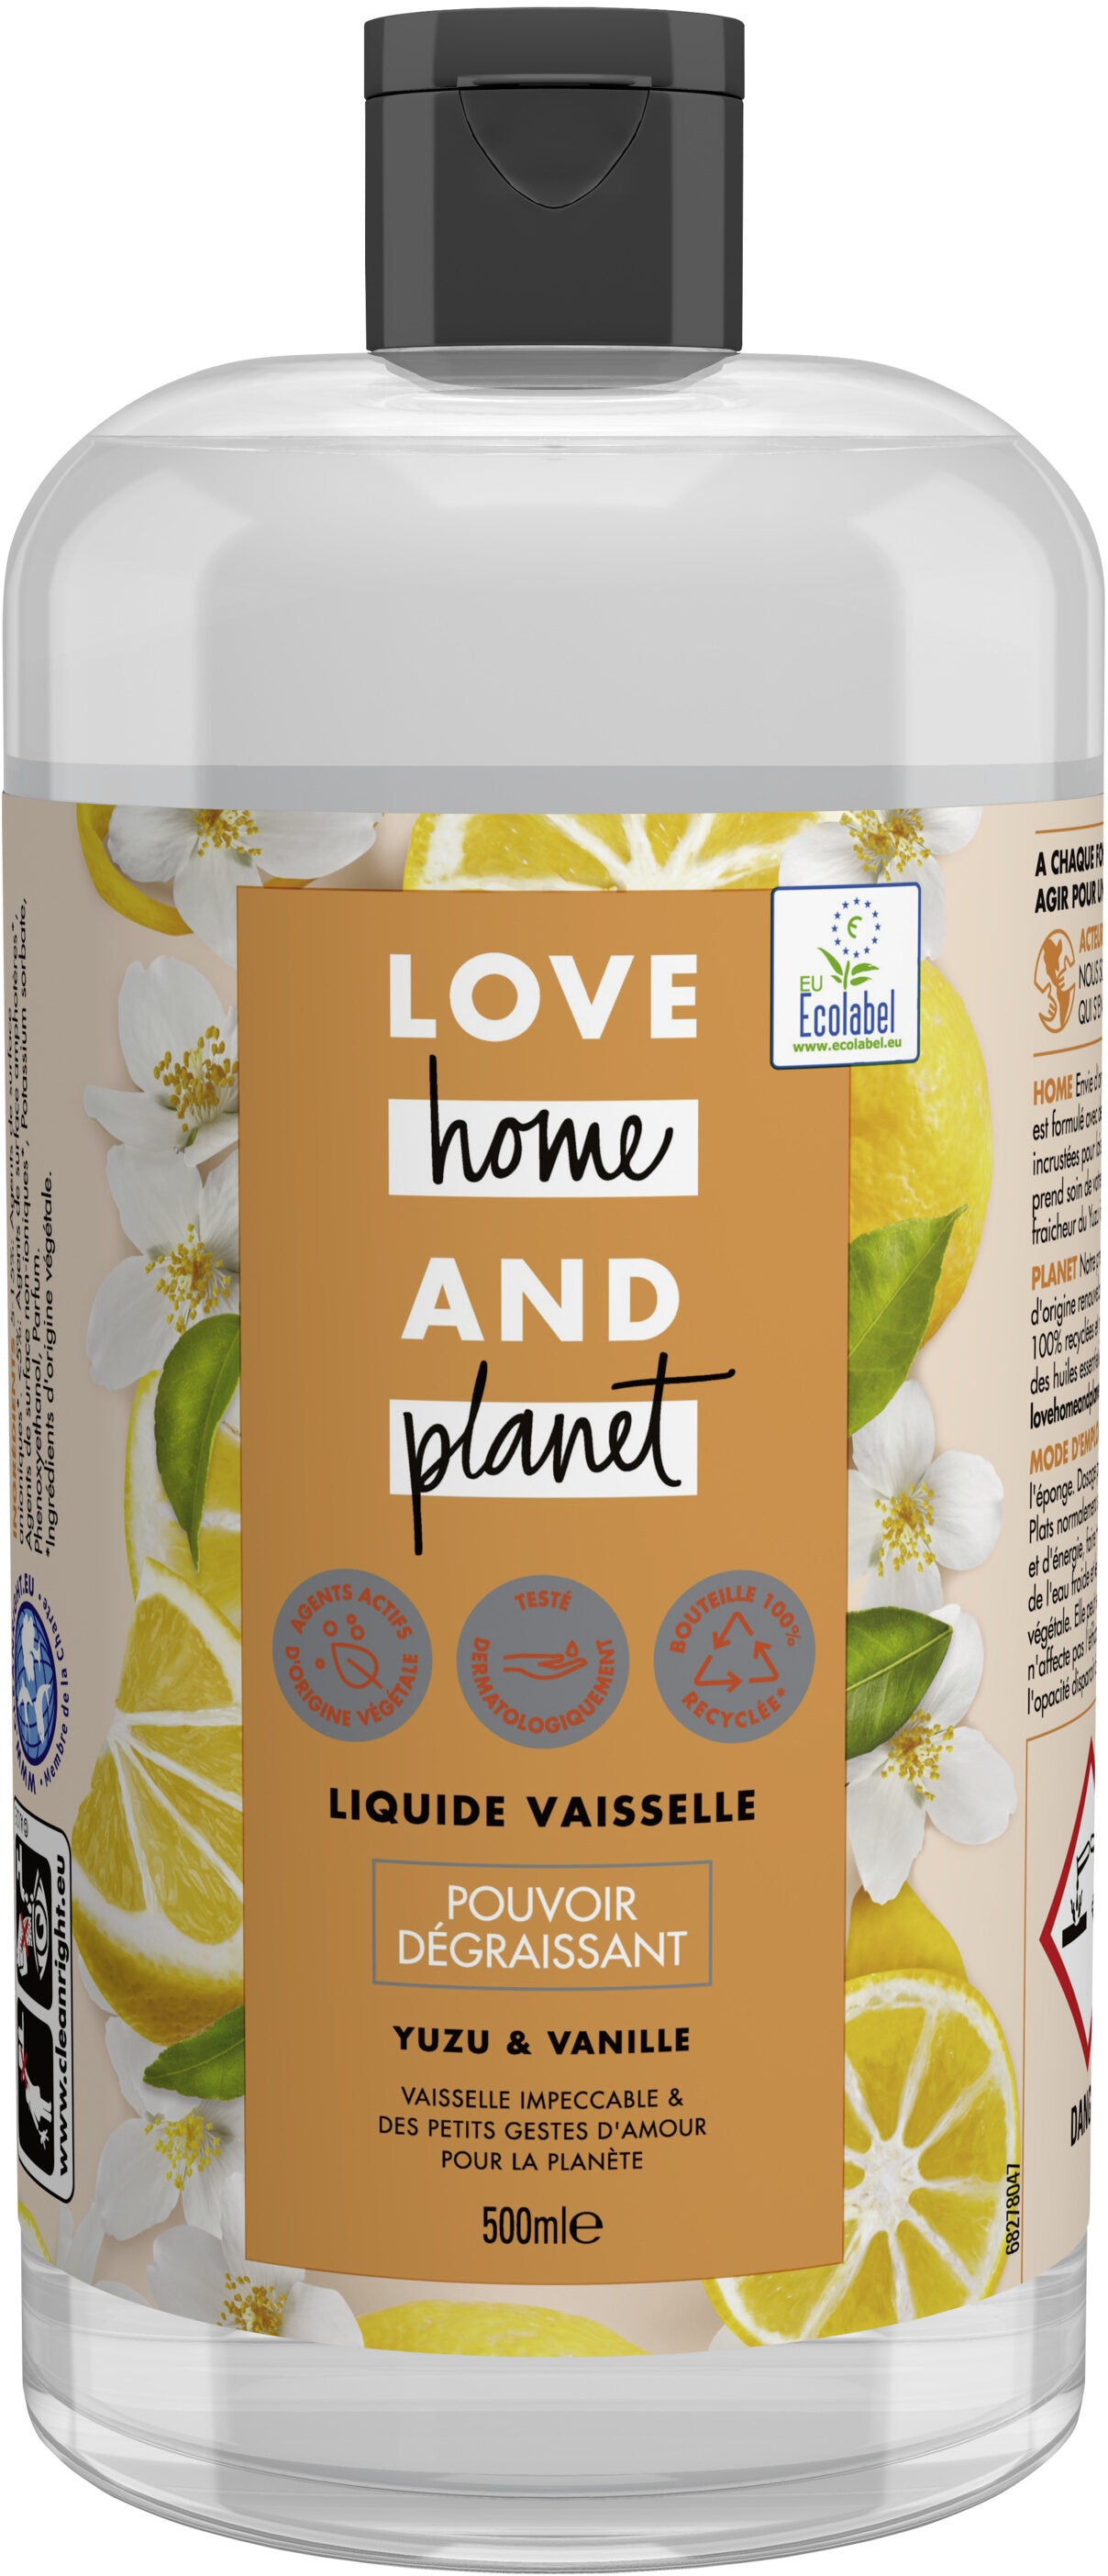 Liquide Vaisselle Love Home And Planet au Yuzu & Vanille 500ml